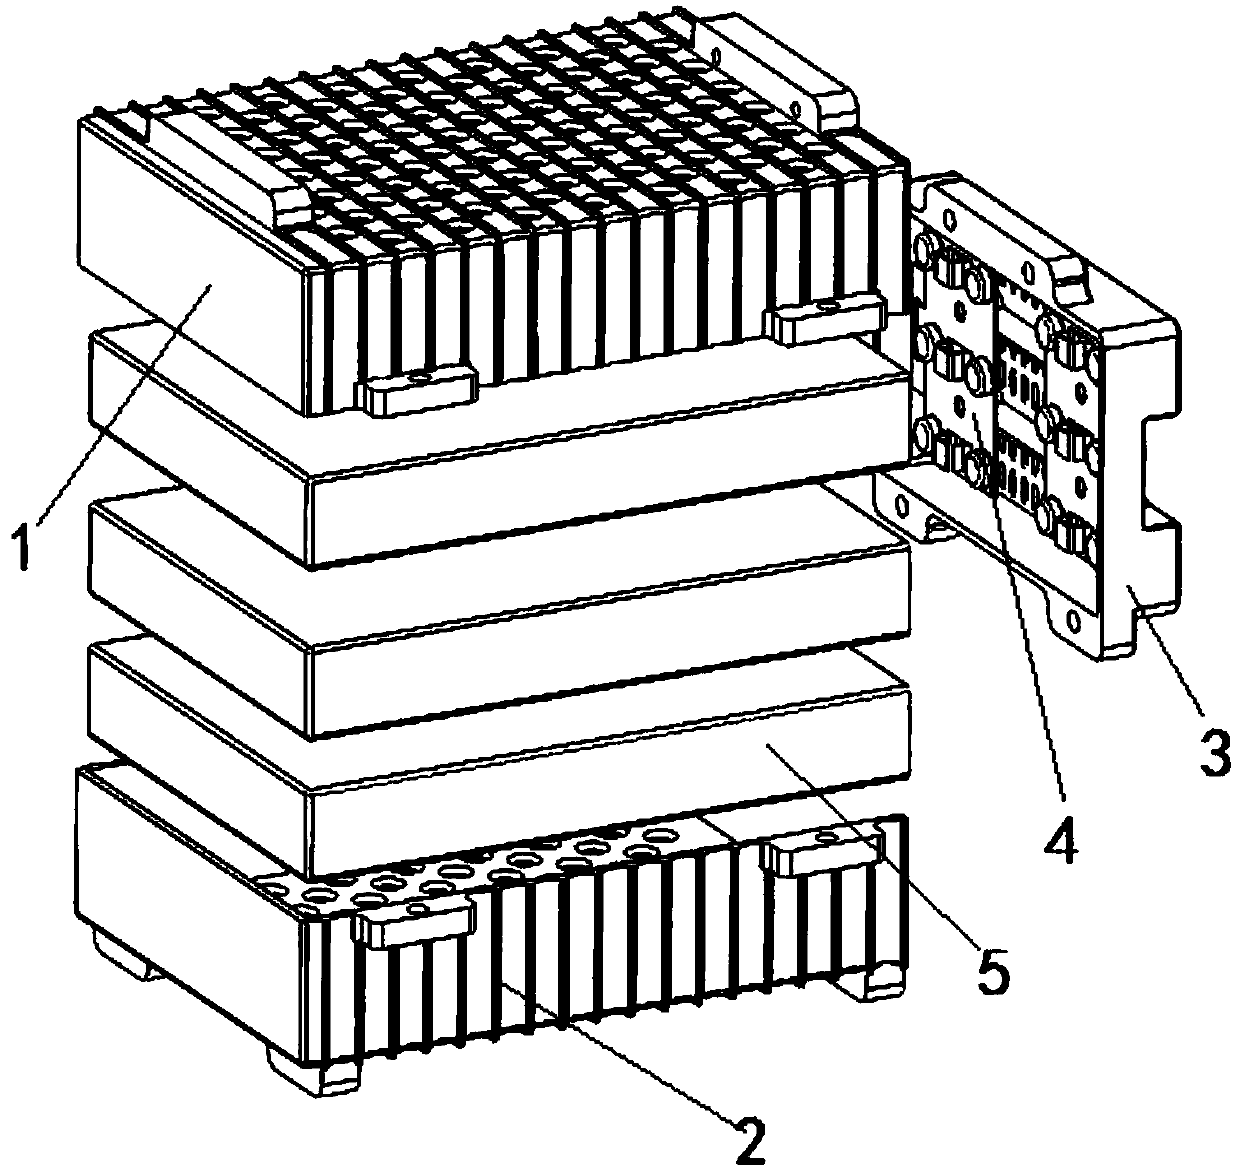 Novel square lithium battery standardized module encapsulation case and PACK method